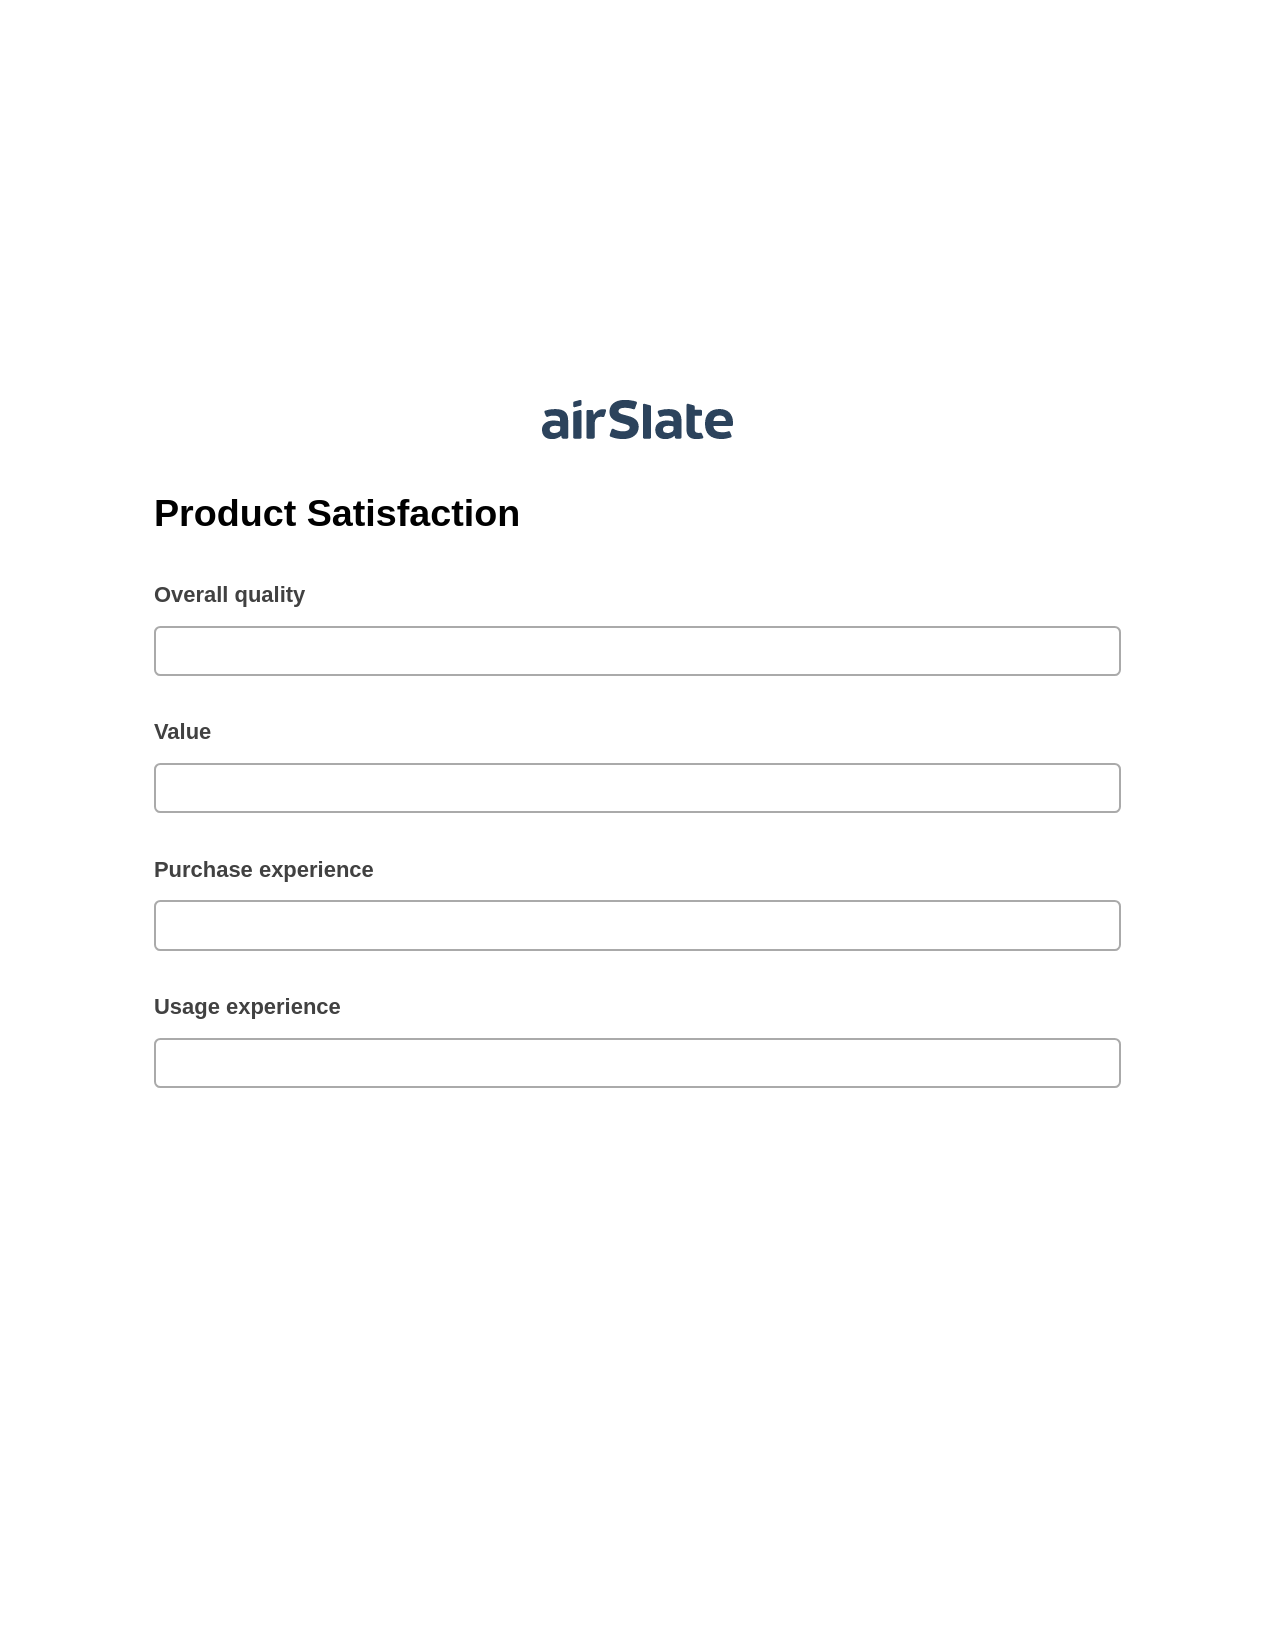 Multirole Product Satisfaction Pre-fill Slate from MS Dynamics 365 Records Bot, Invoke Salesforce Process Bot, Archive to SharePoint Folder Bot